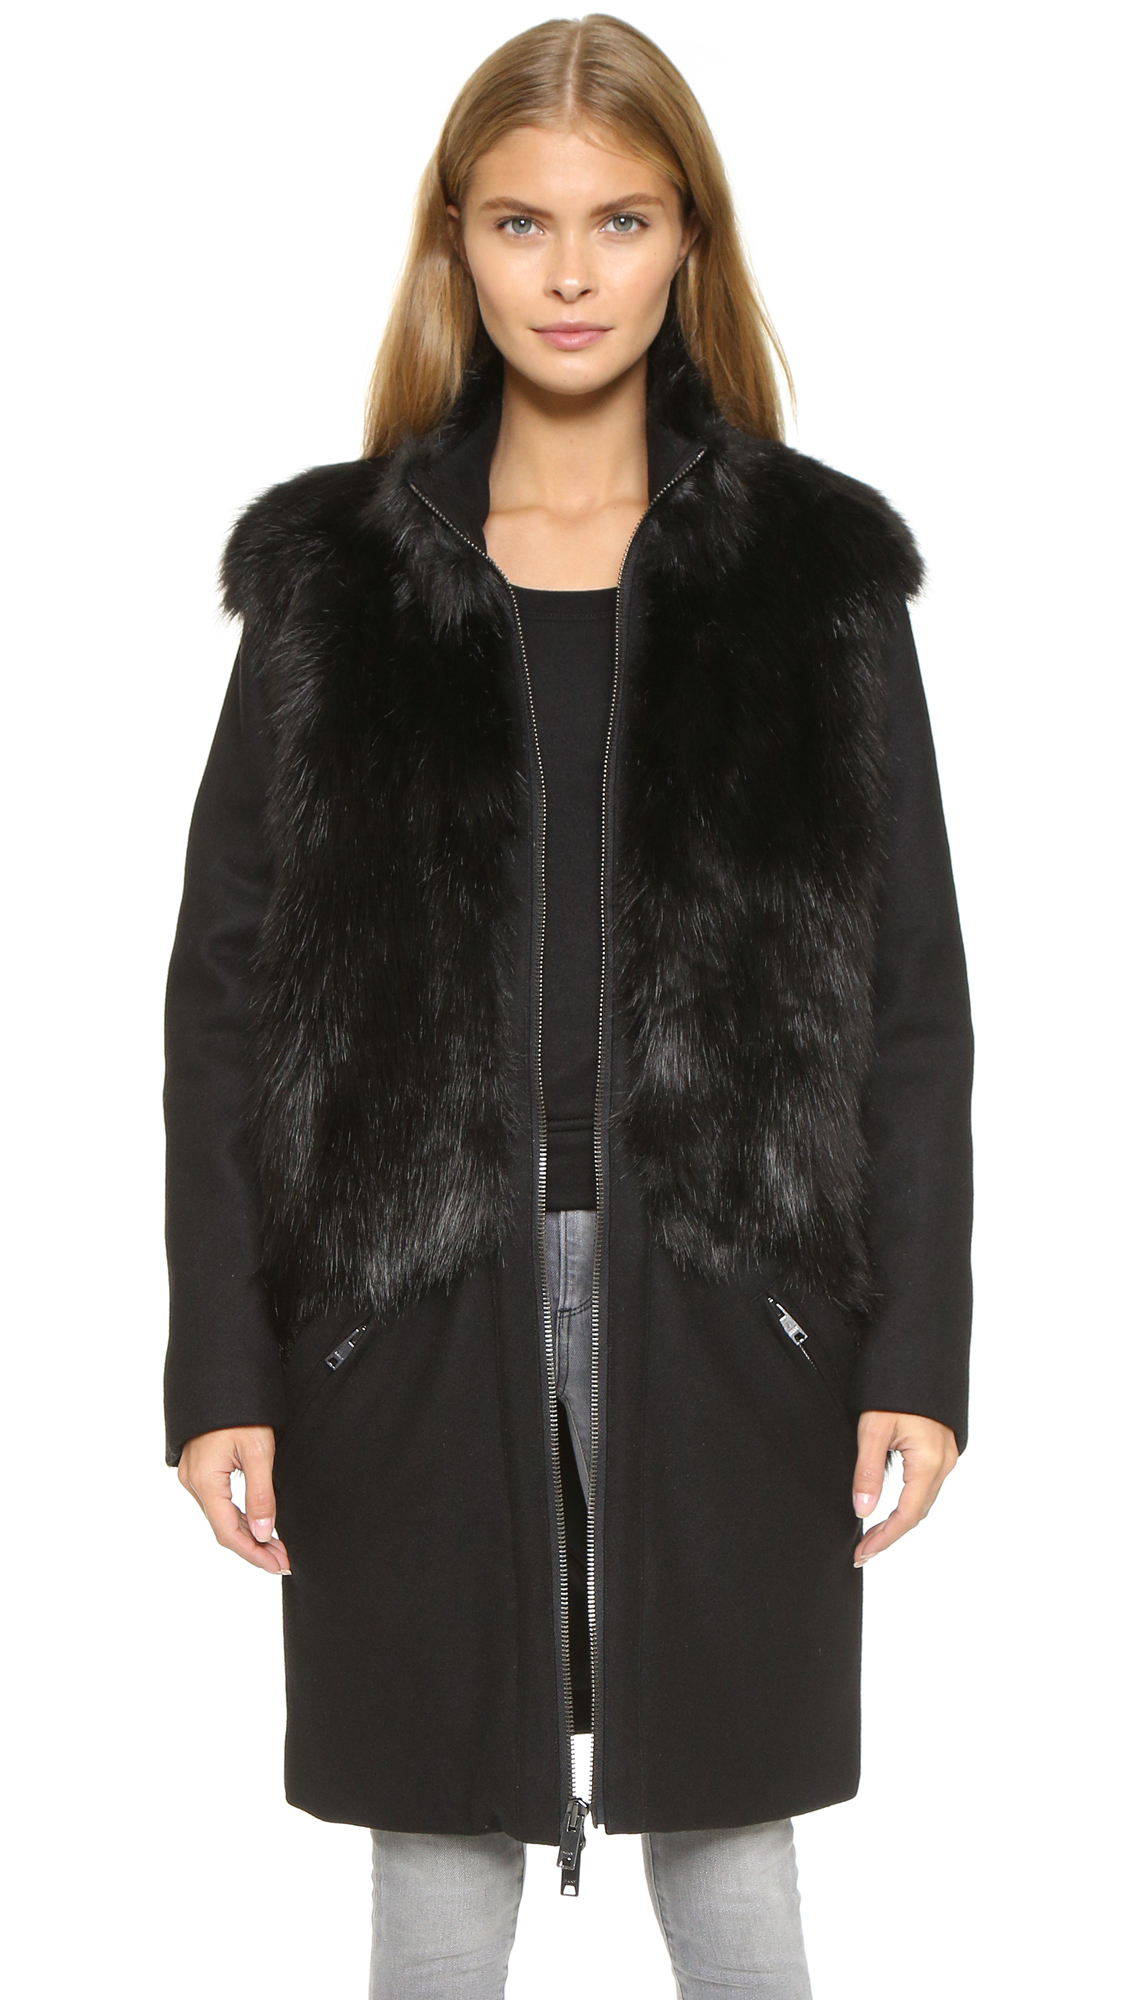 Lyst - Dkny Coat With Faux Fur Trim in Black